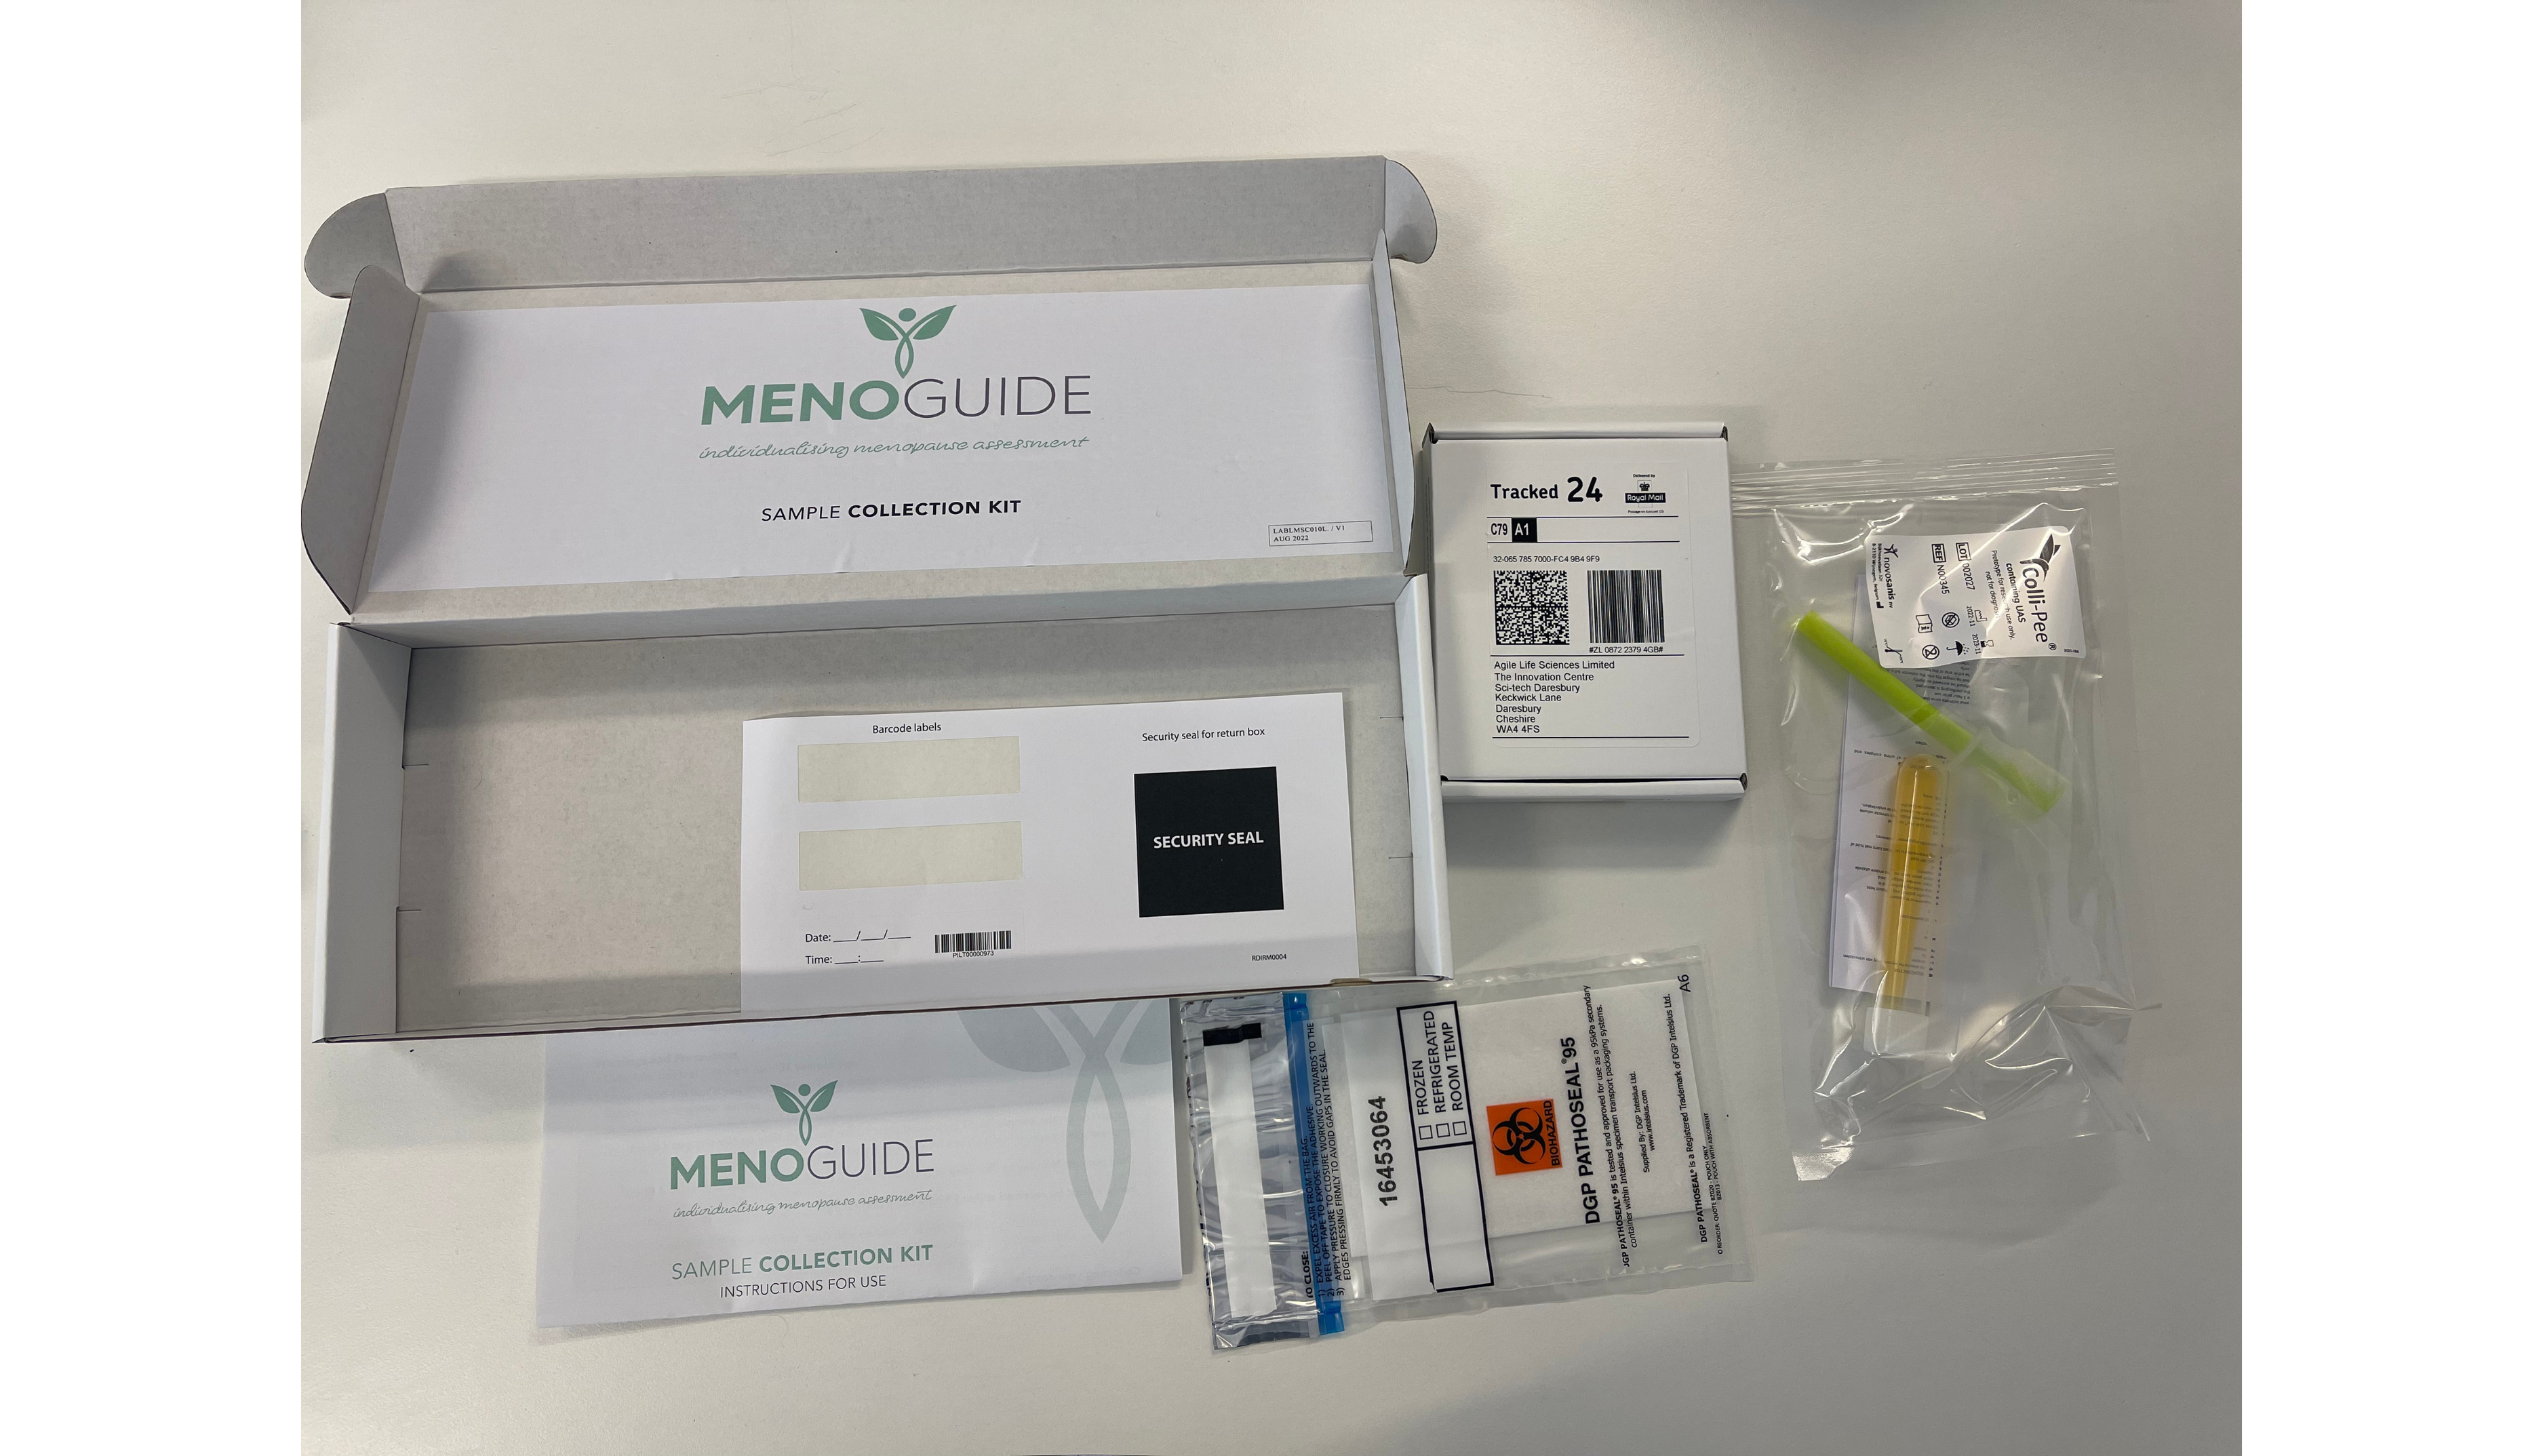 Menoguide Test Kit - Menopause test kit